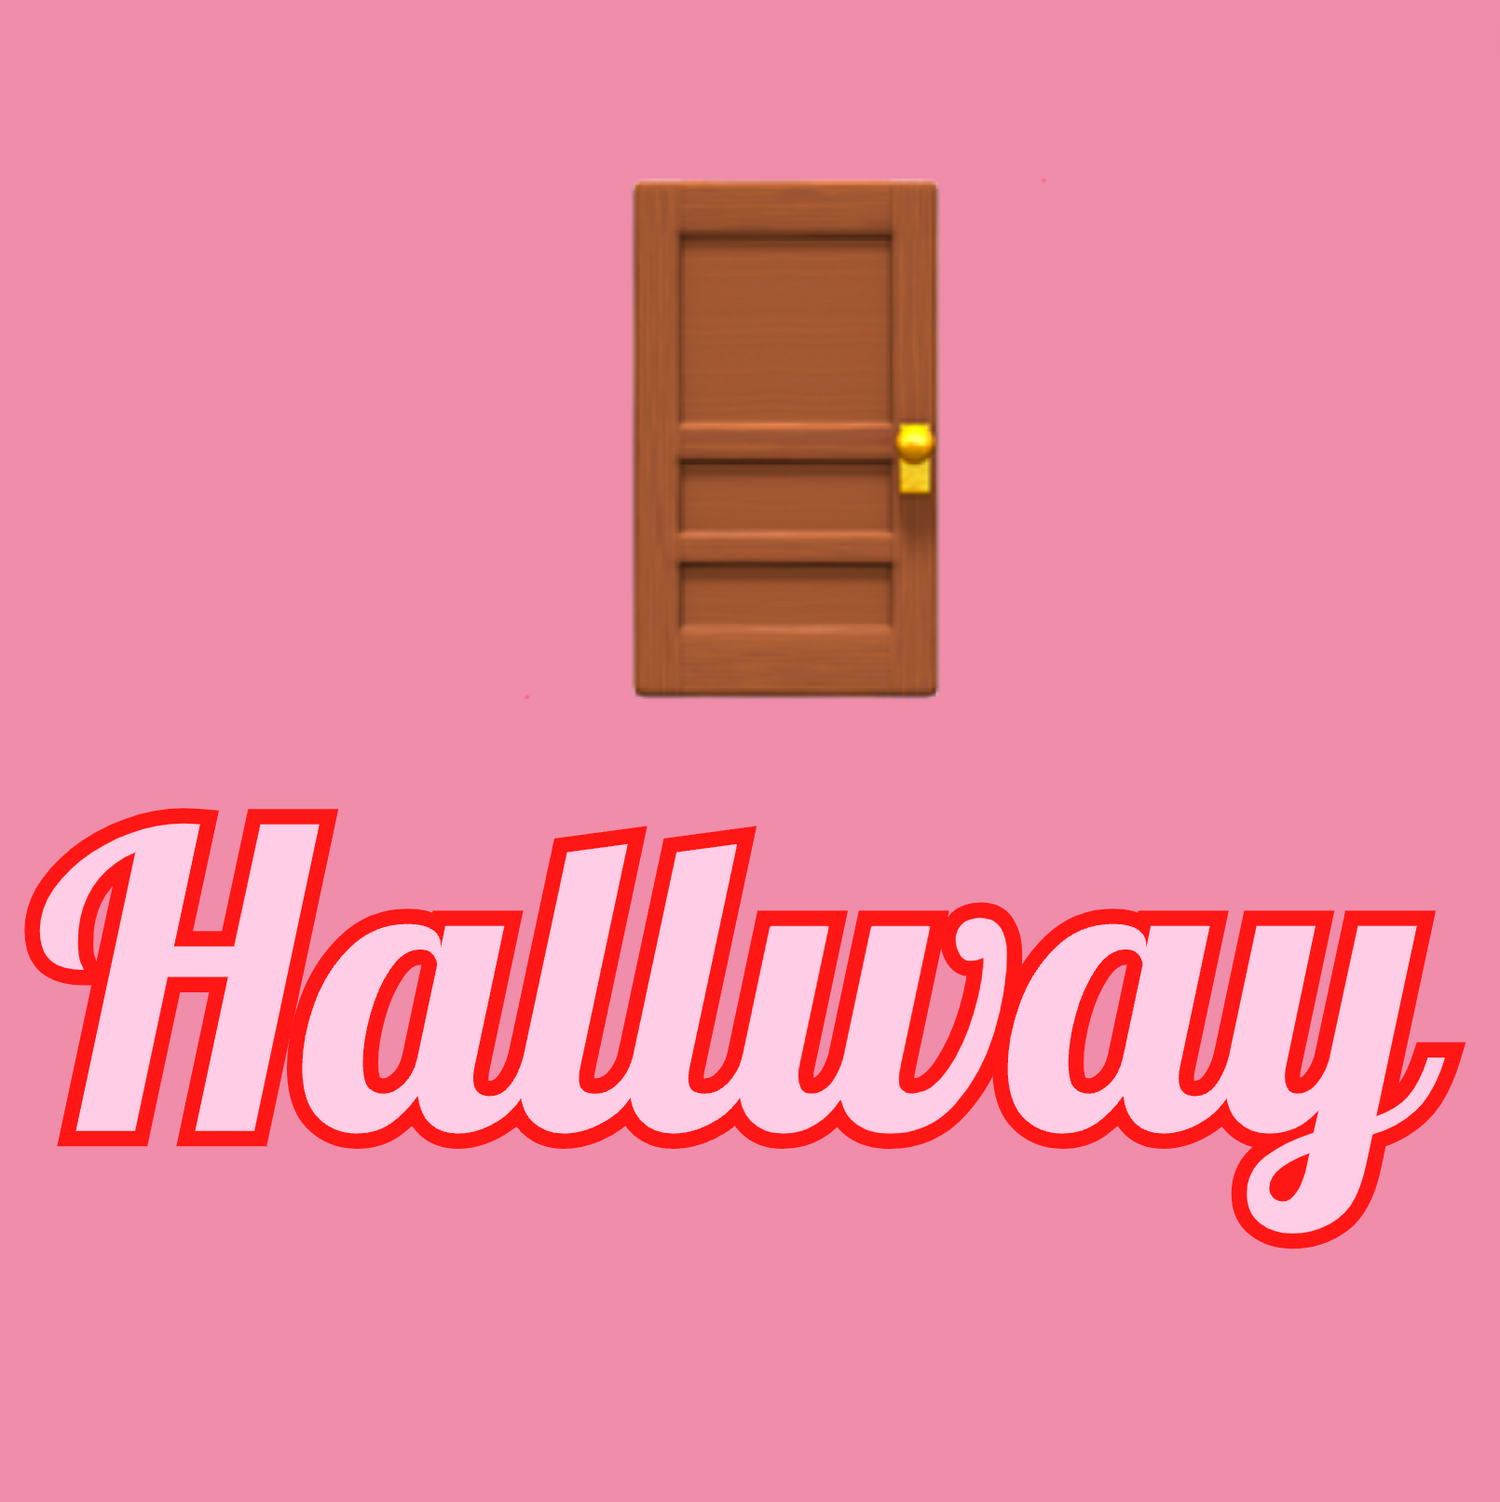 Hallway / Entrance